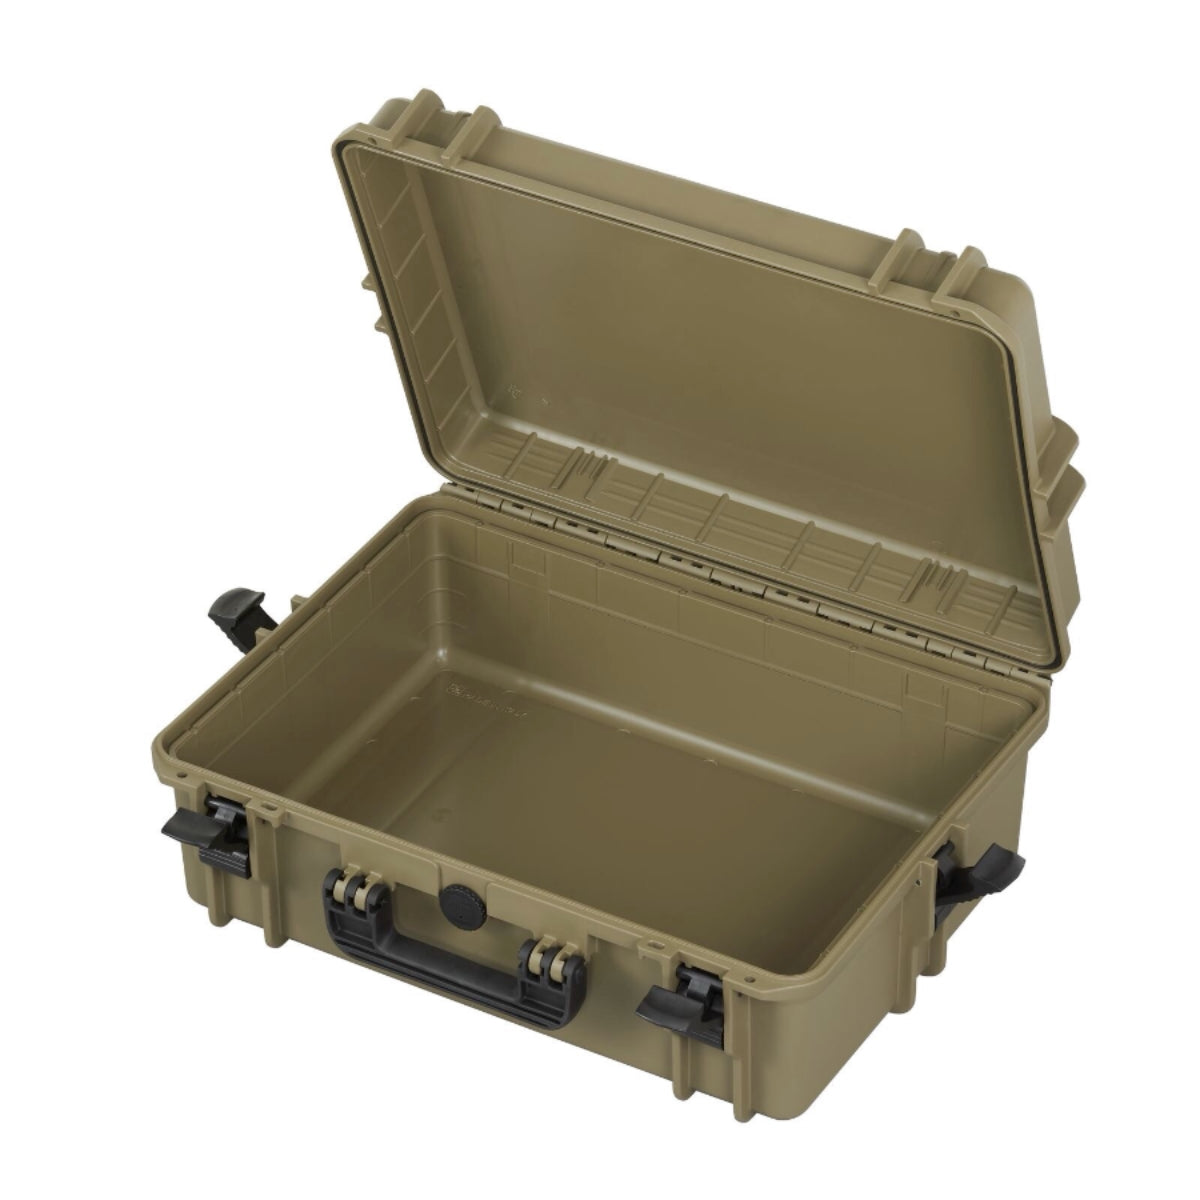 SP PRO 505 Sahara Carry Case, Empty w/ Convoluted Foam in Lid, ID: L500xW350xH194mm